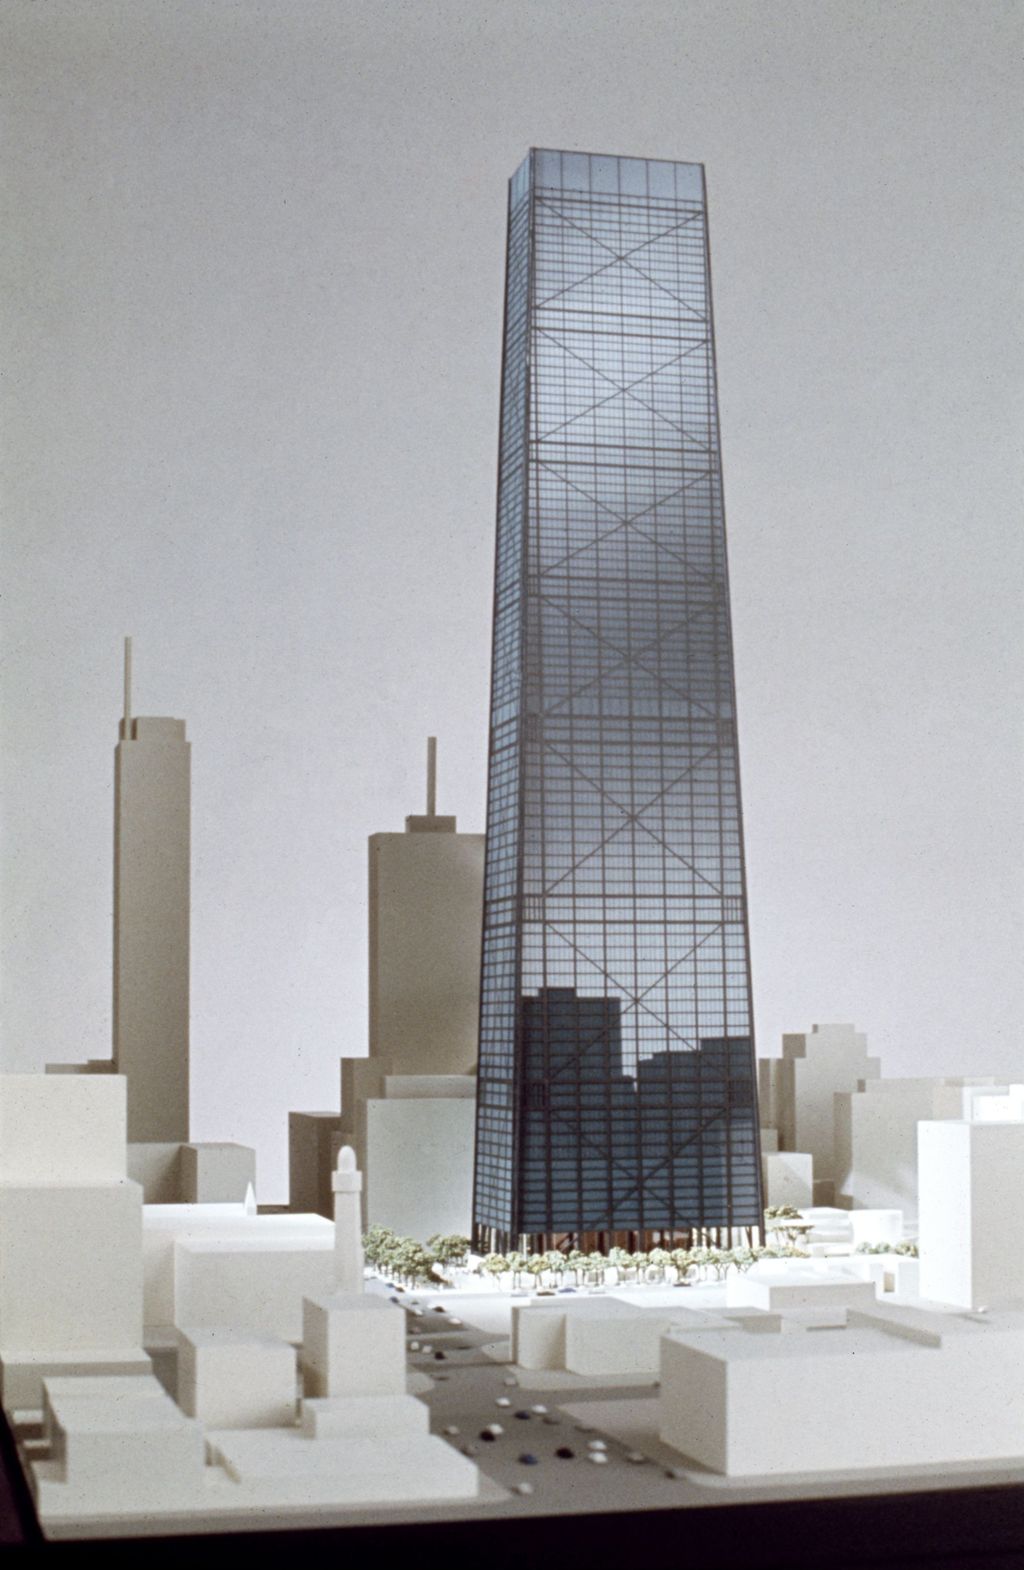 Miniature of John Hancock Center